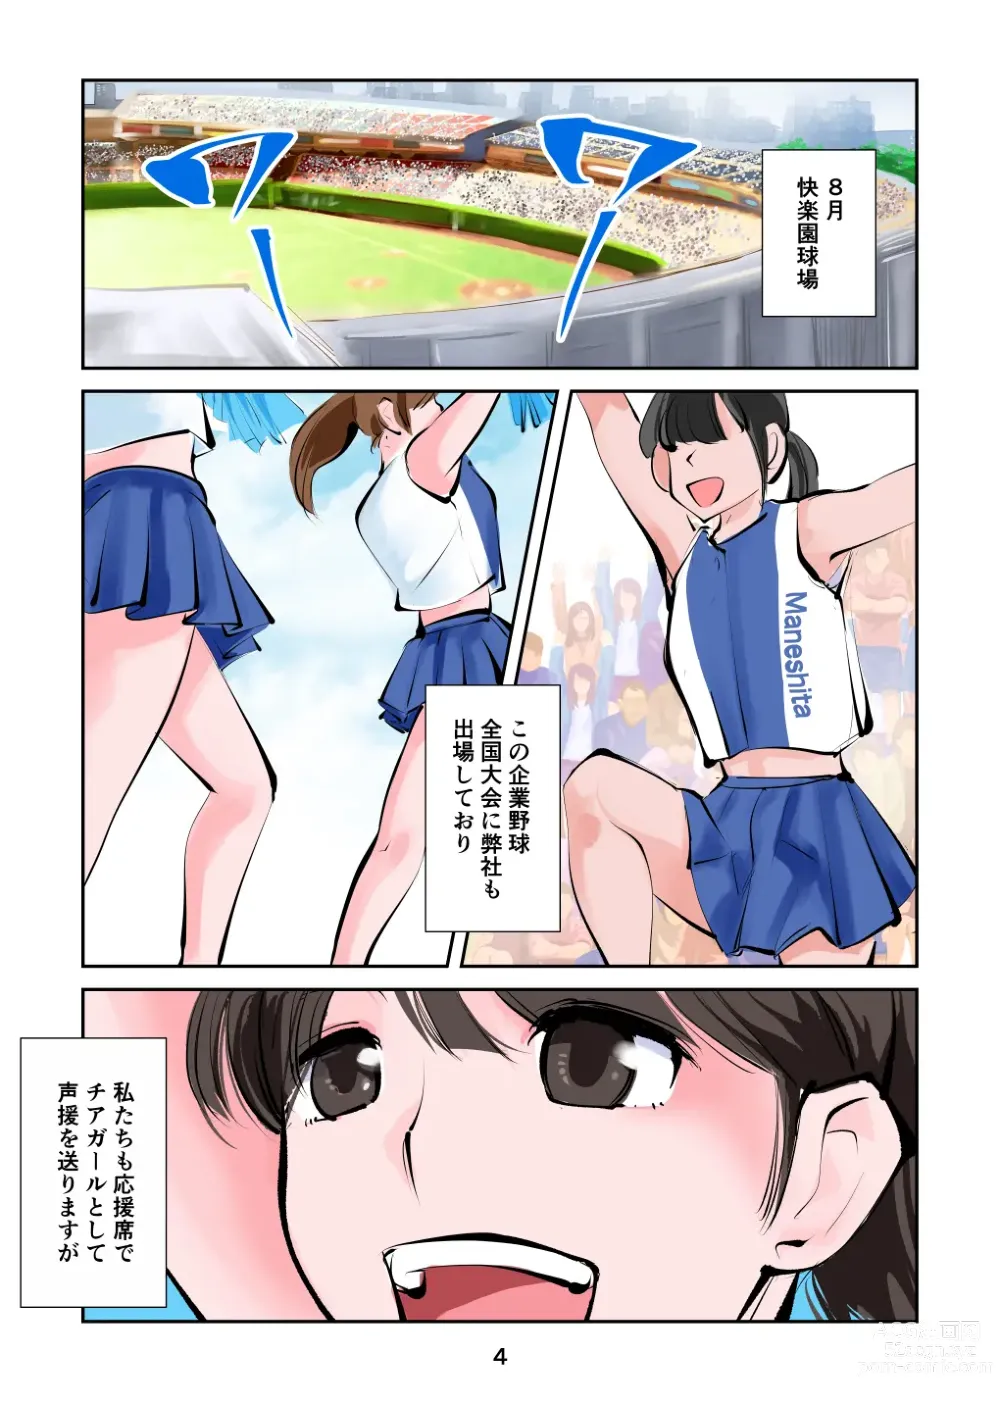 Page 4 of doujinshi Kinkeri Cheer Girl 3